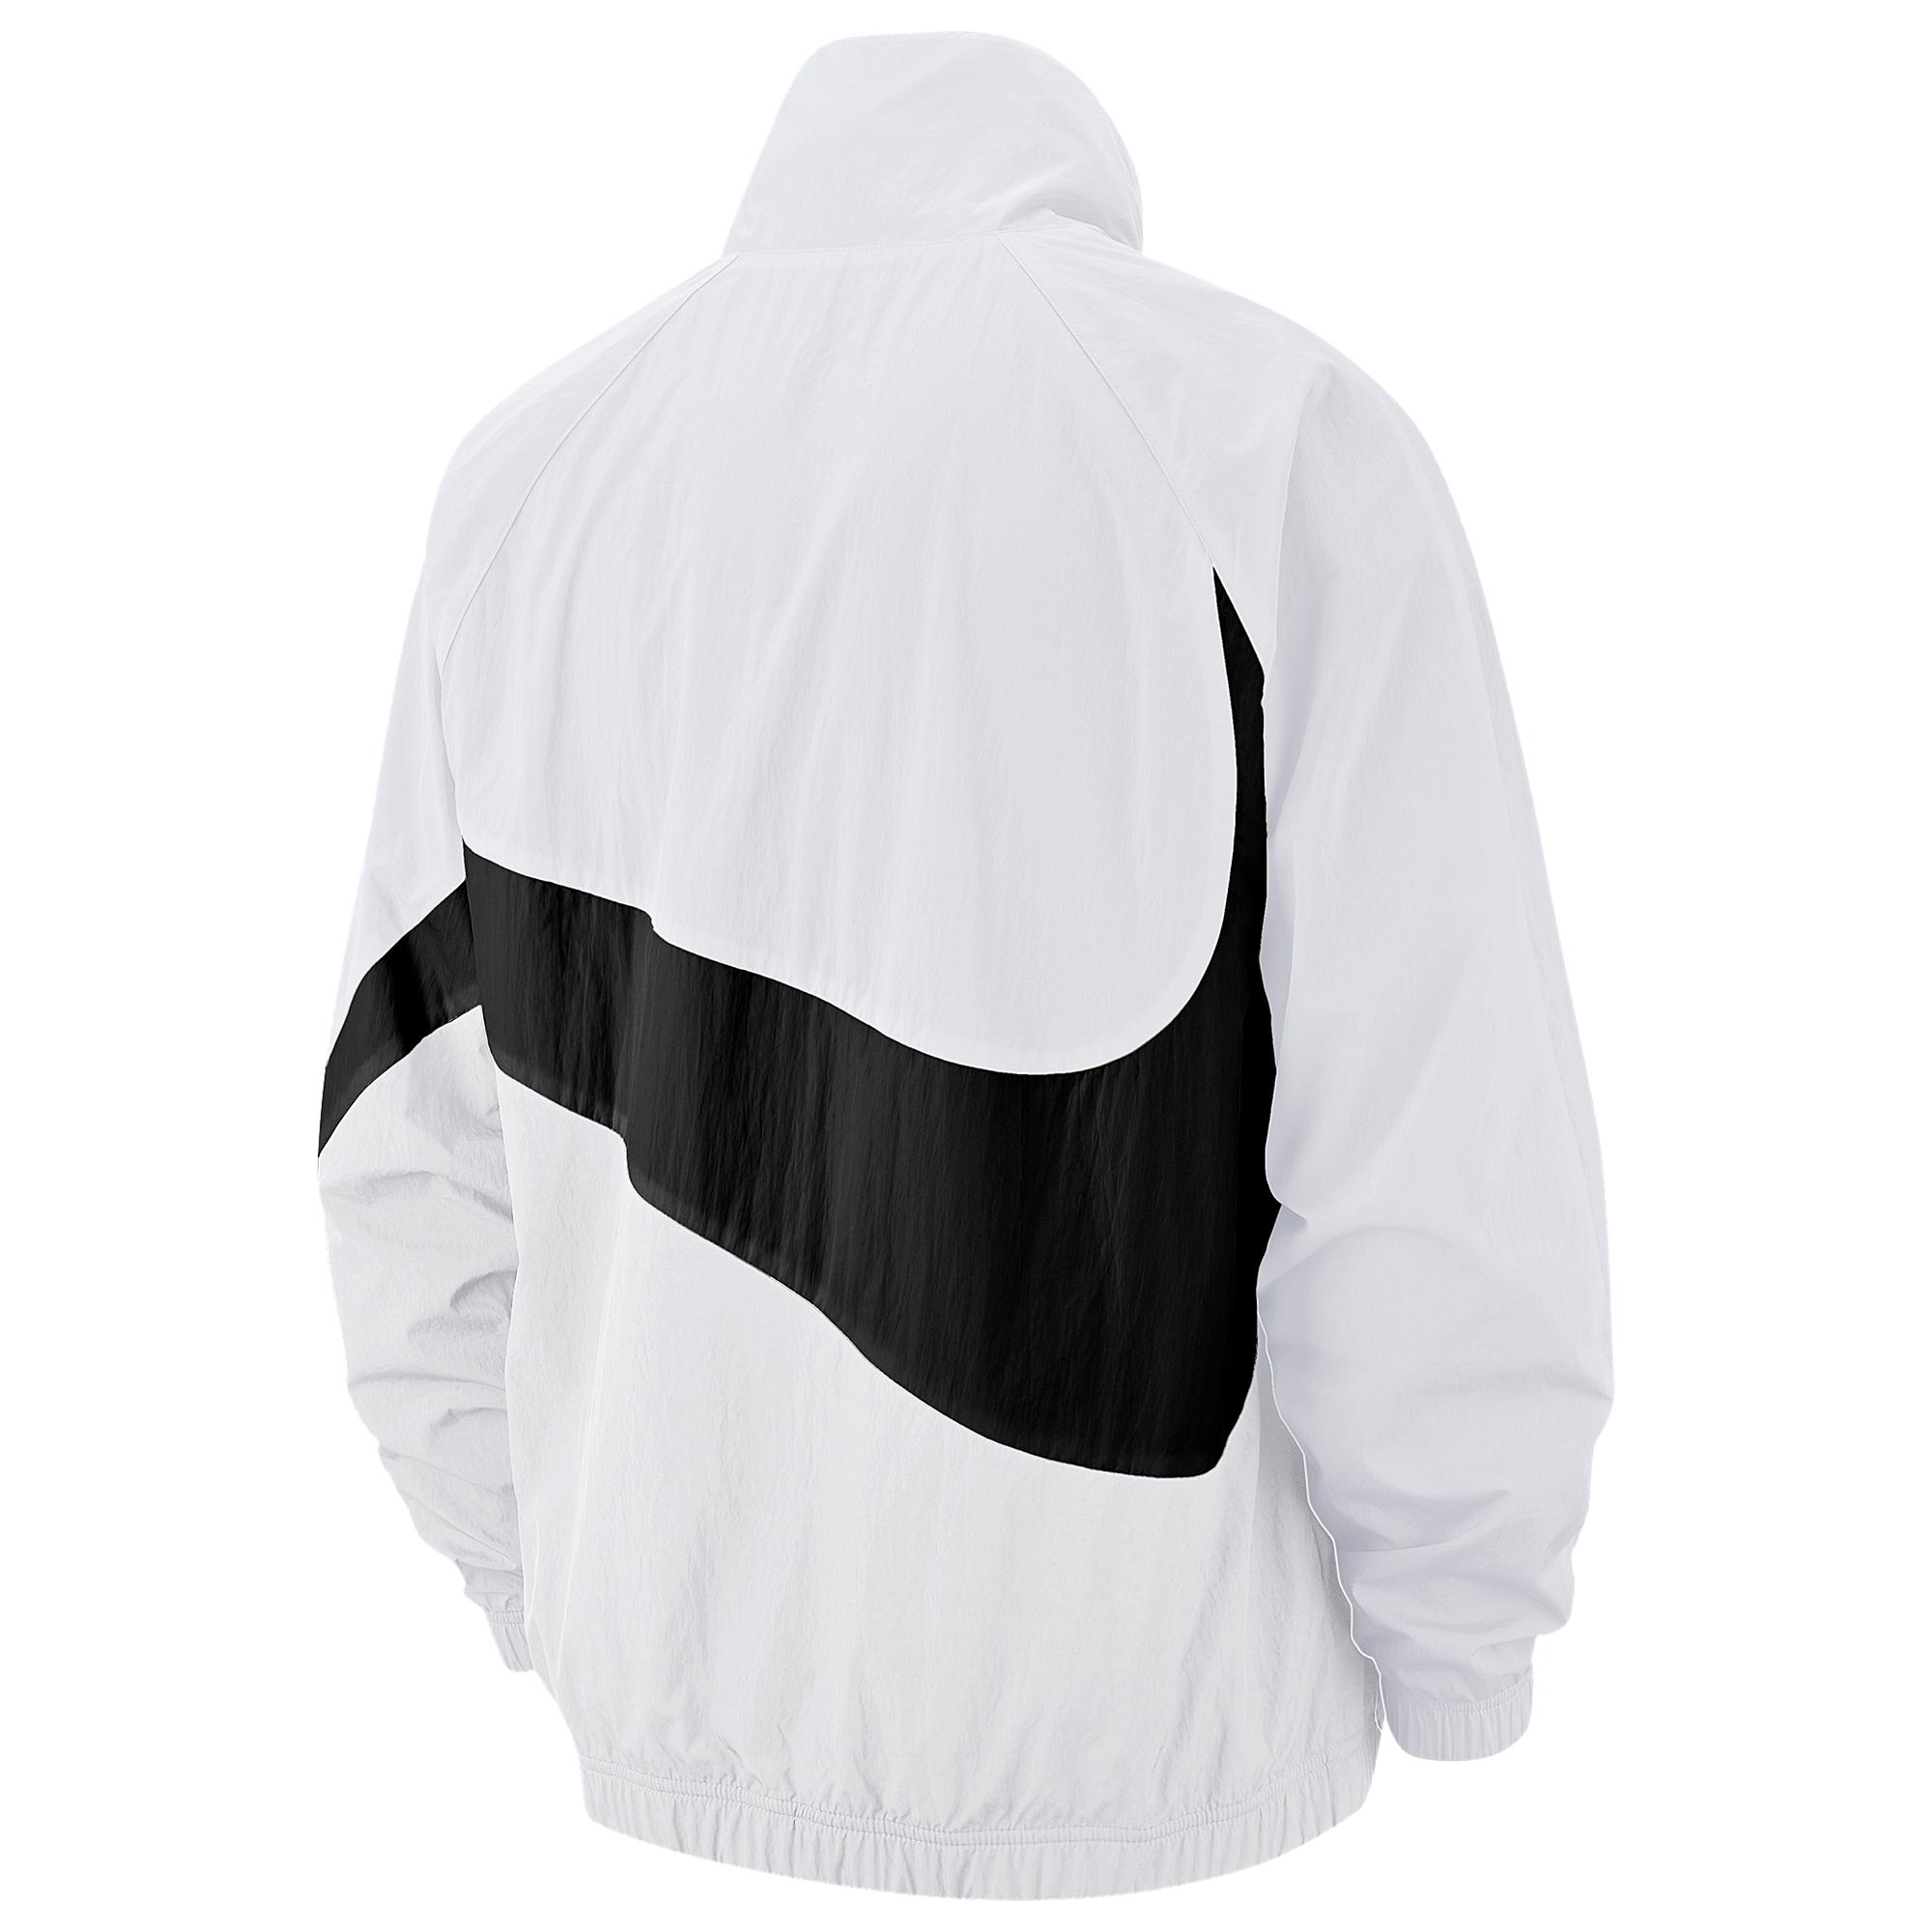 Nike Synthetic Large Swoosh Windbreaker Jacket in White/Black (White) for  Men - Lyst